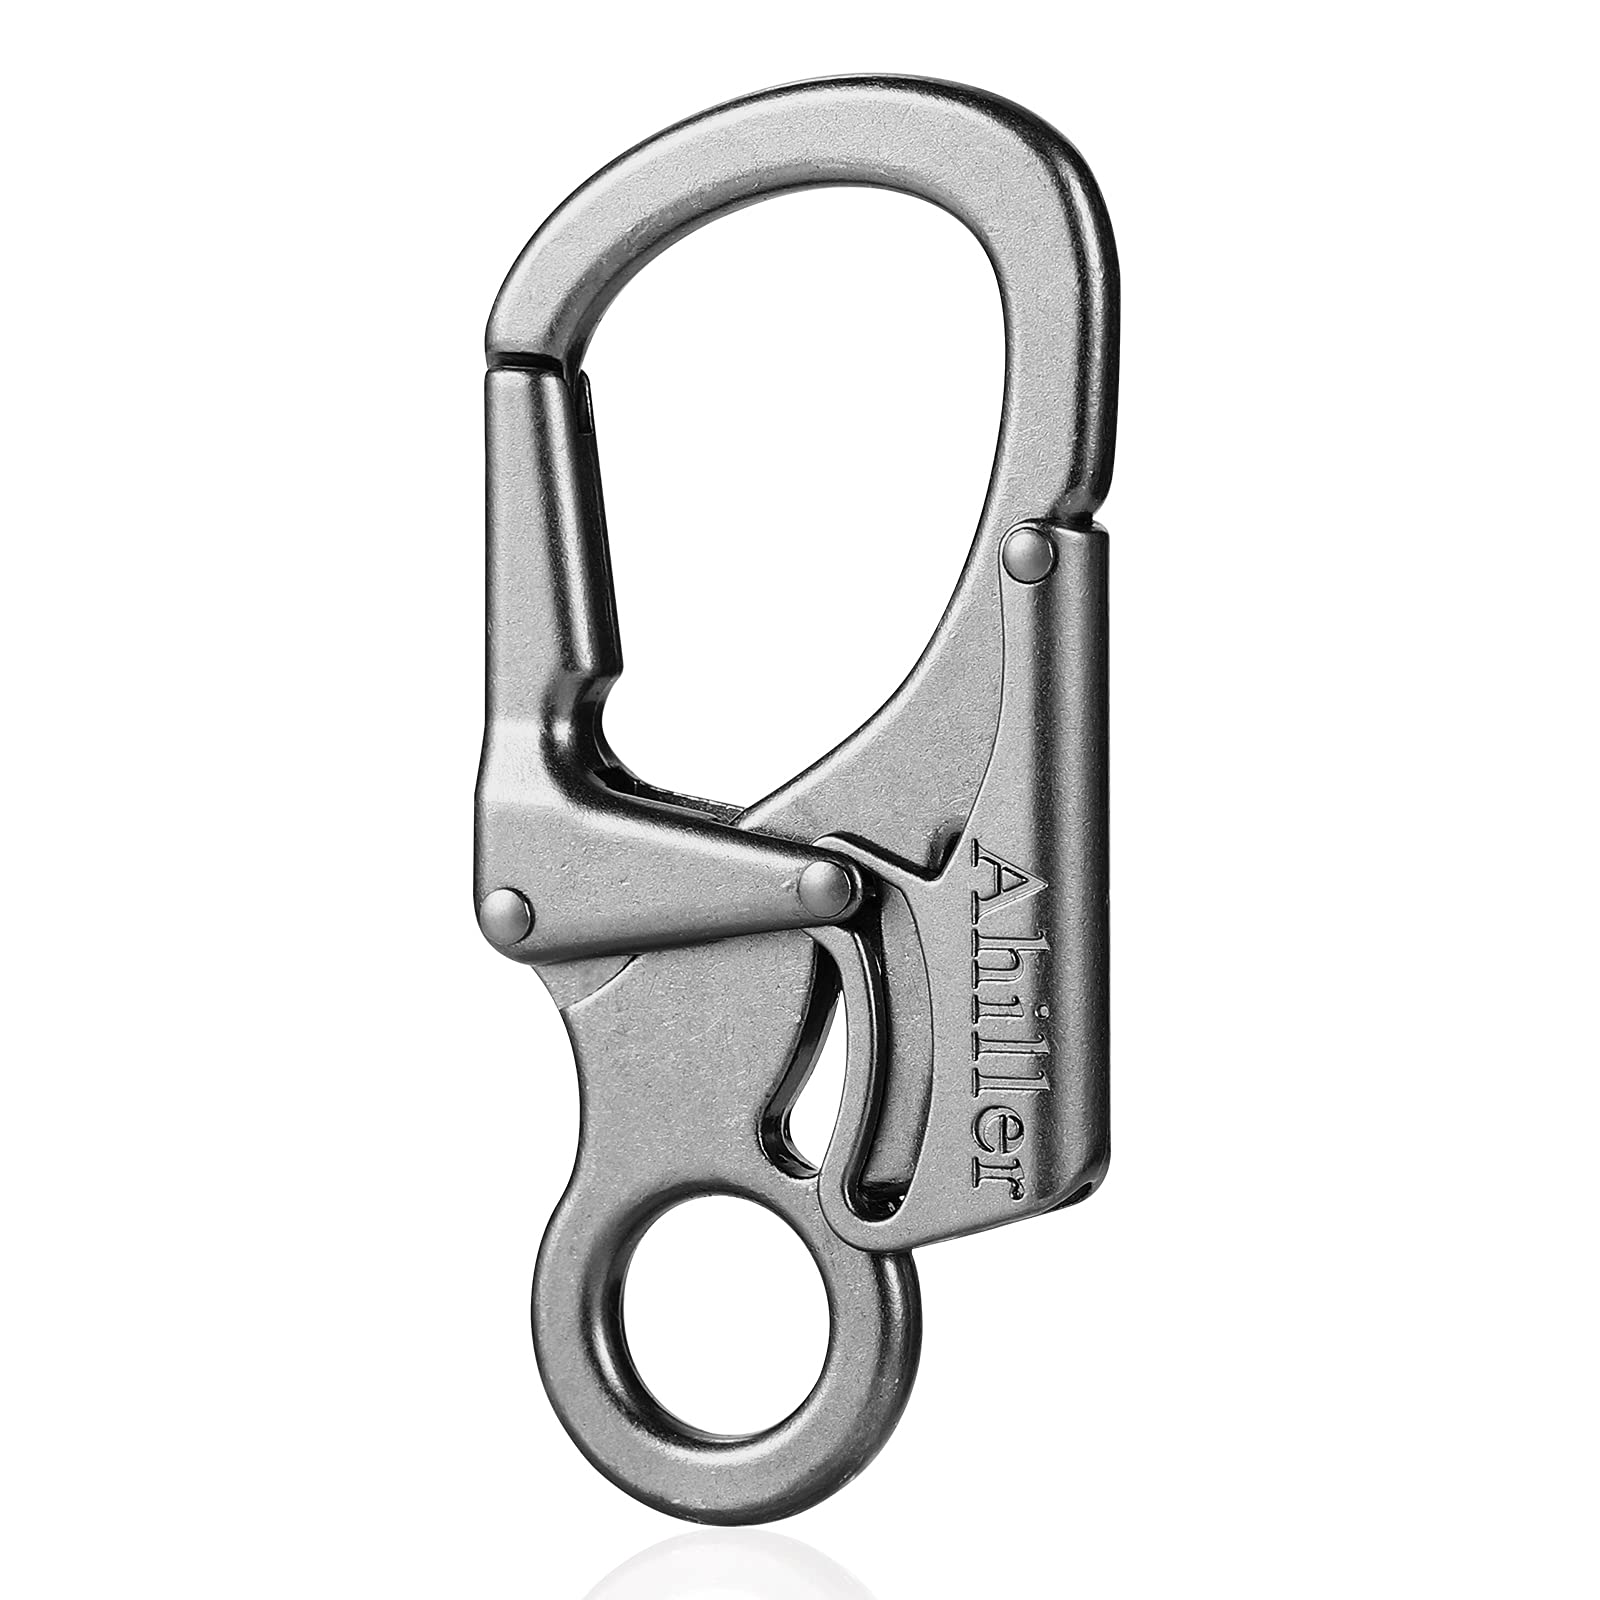 Carabiner Clip, Double Anti-Misopening Locking Design, 2.95'' in